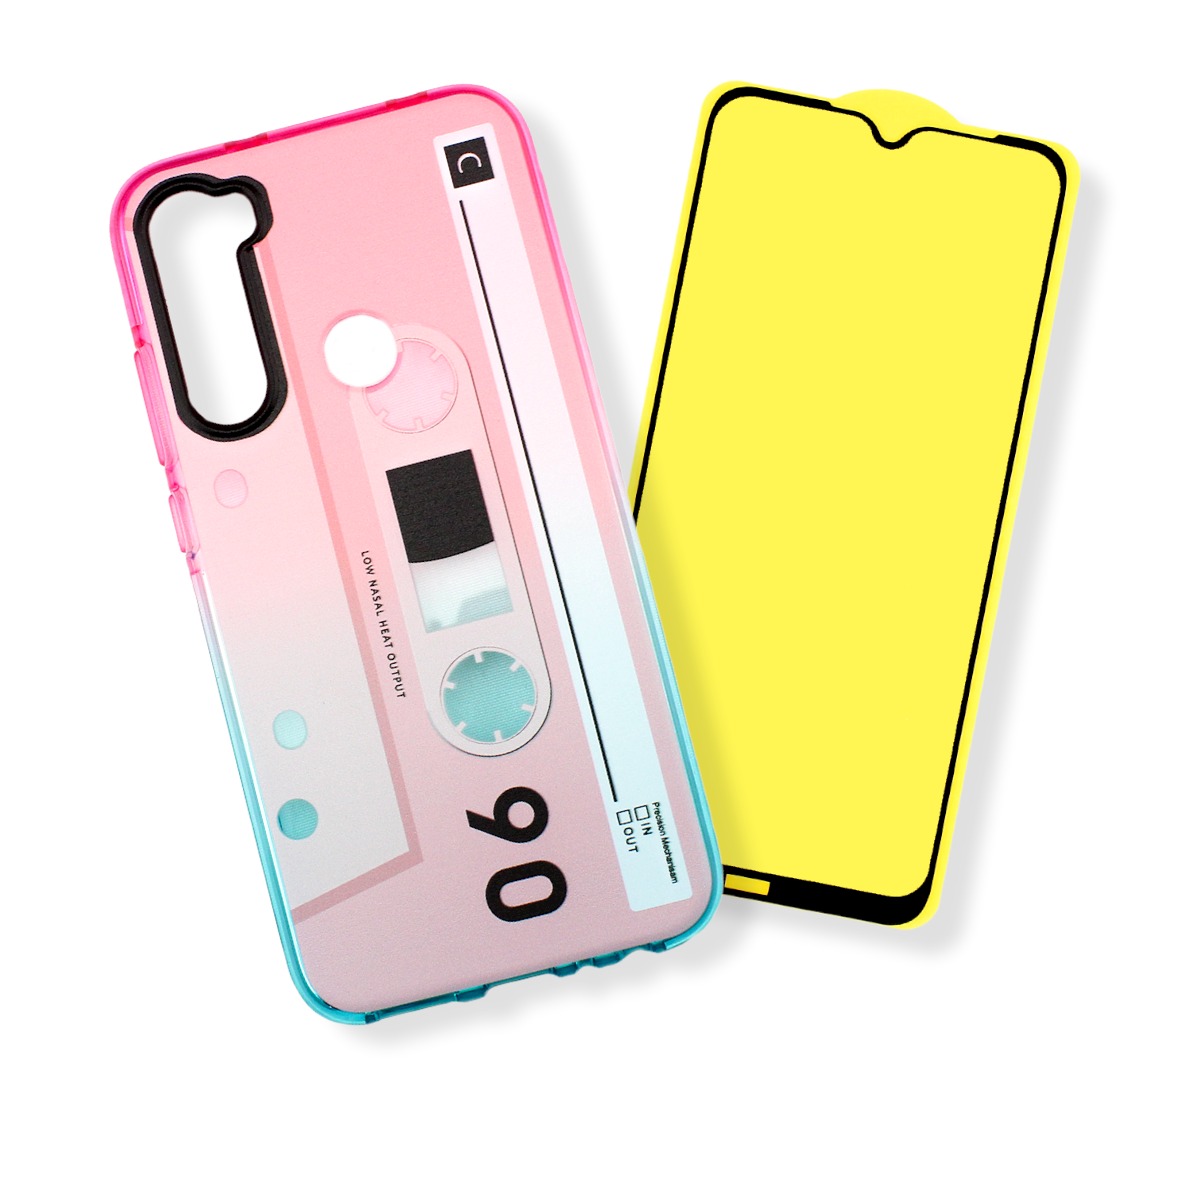 Funda Triche para Xiaomi Redmi Note 11 Diseño Cassette color Rosa/ Azul